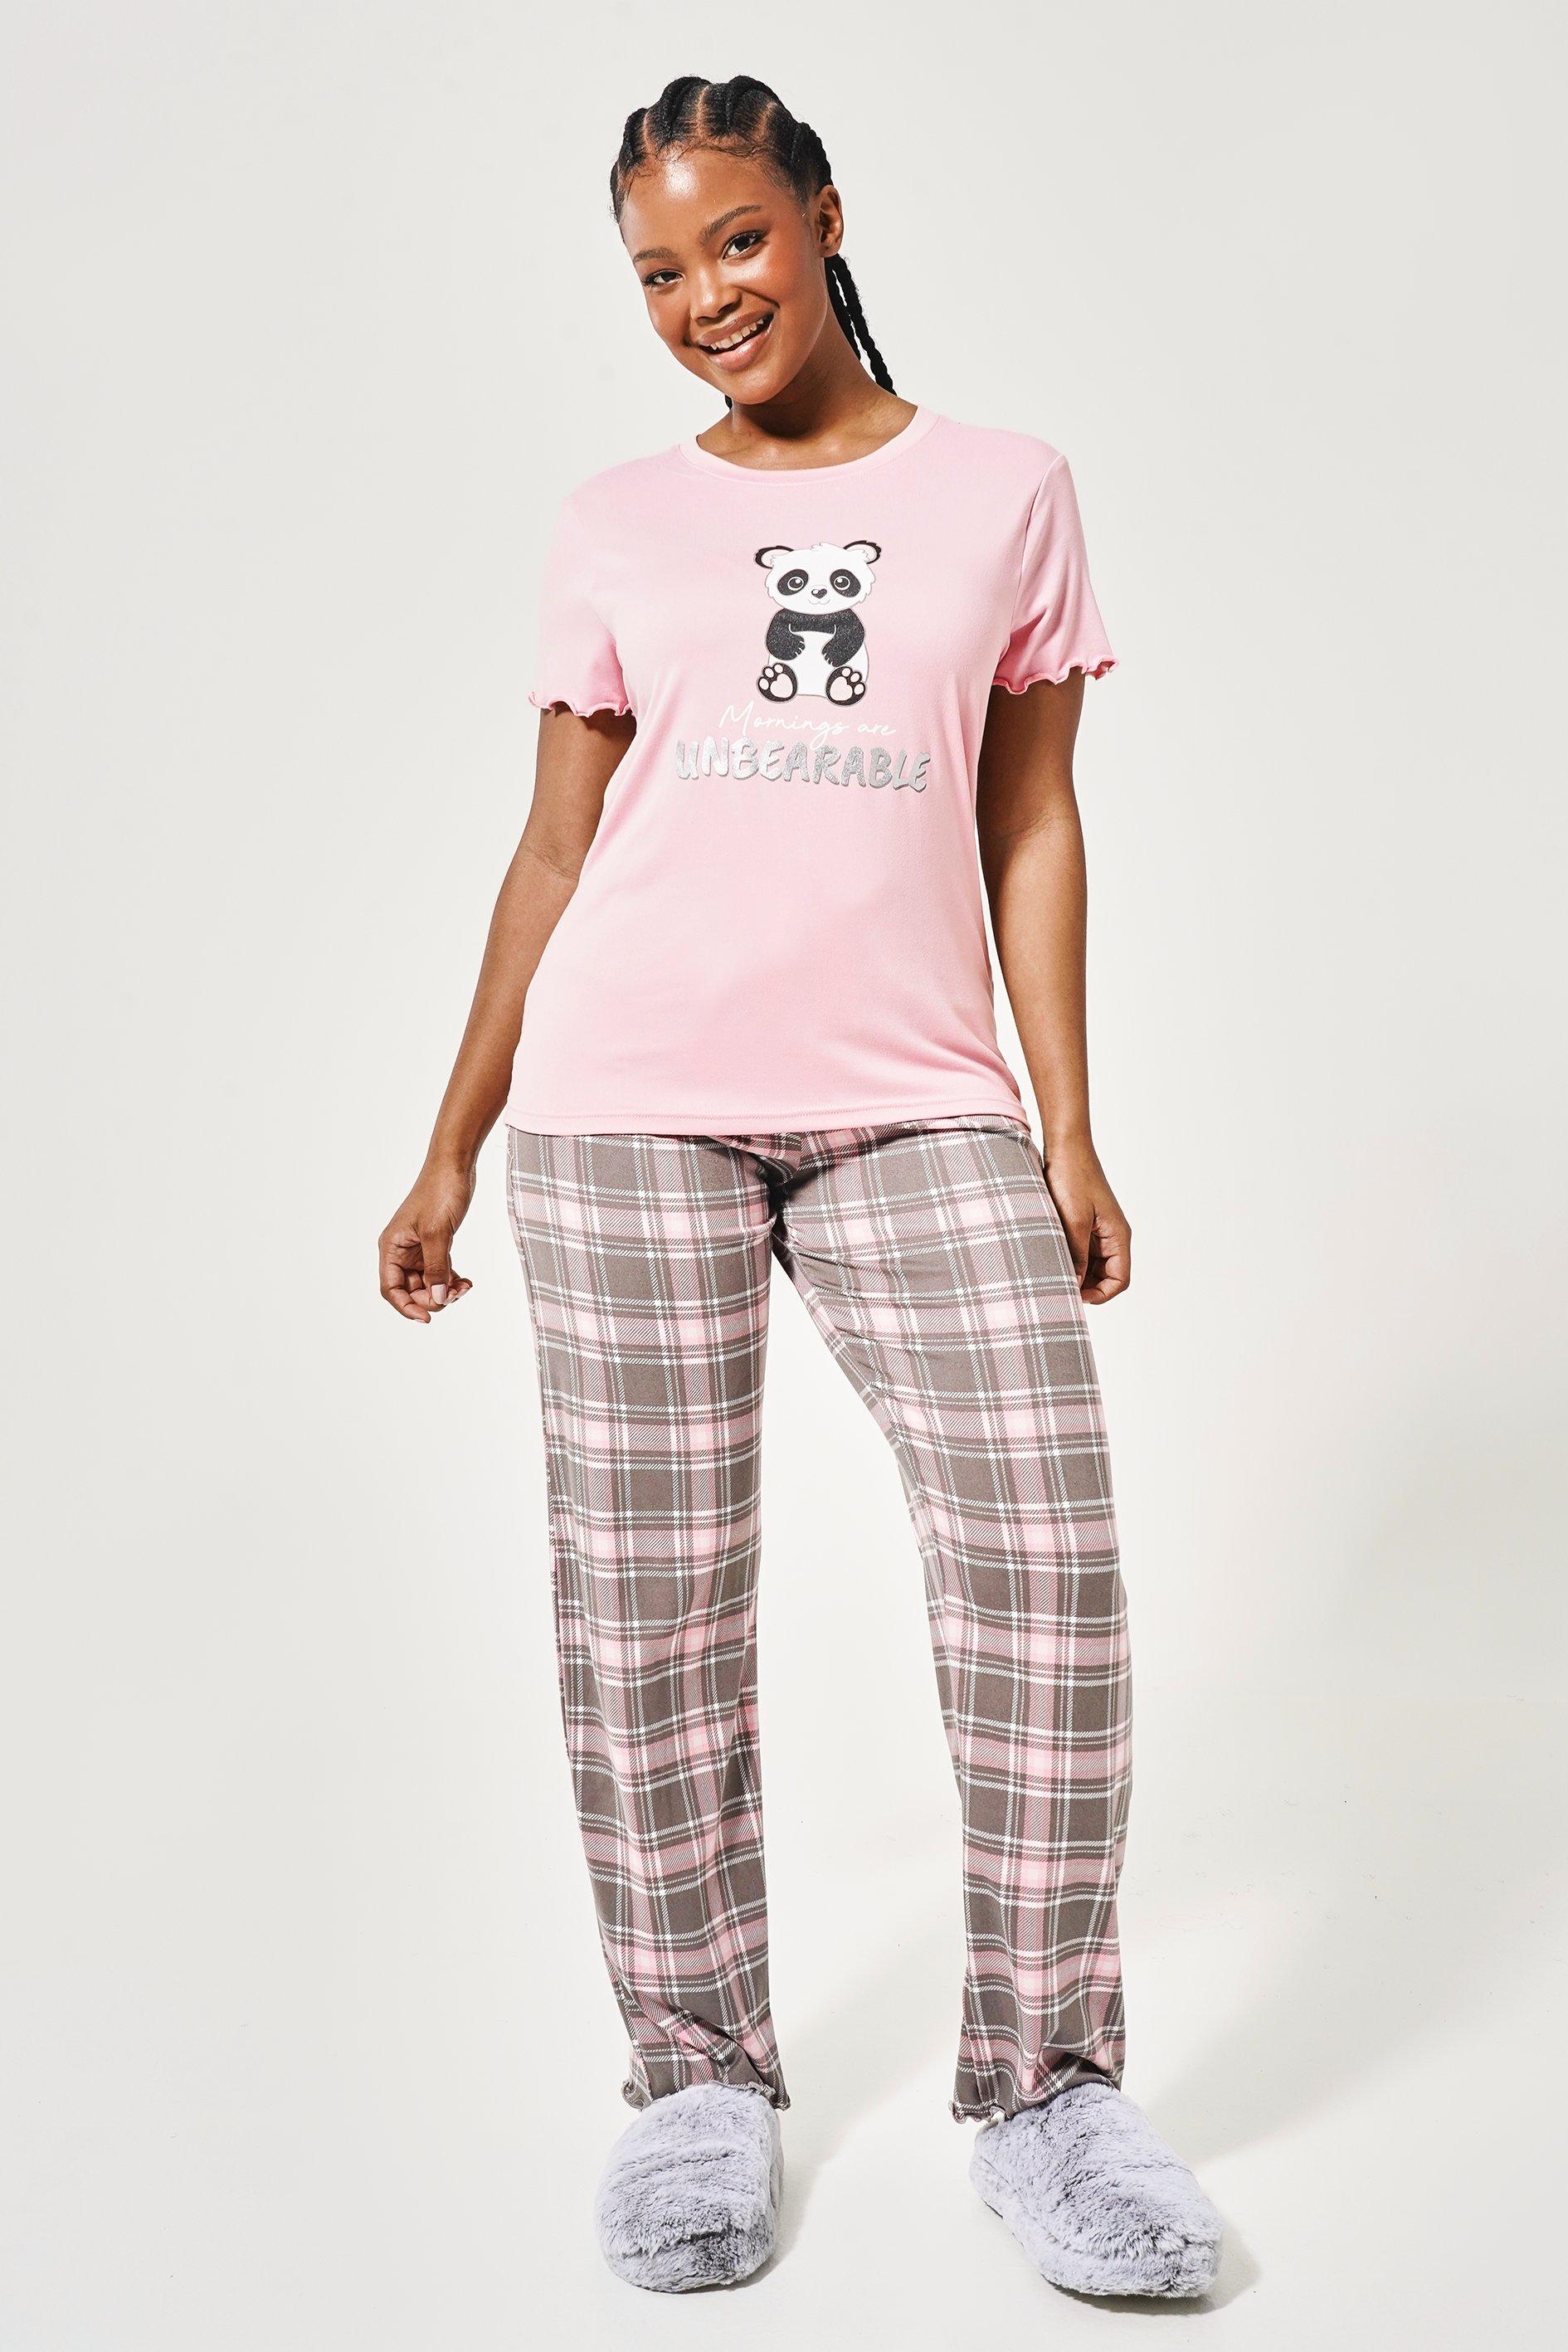 Ladies Pyjama Pants with Pockets - 99 Rands